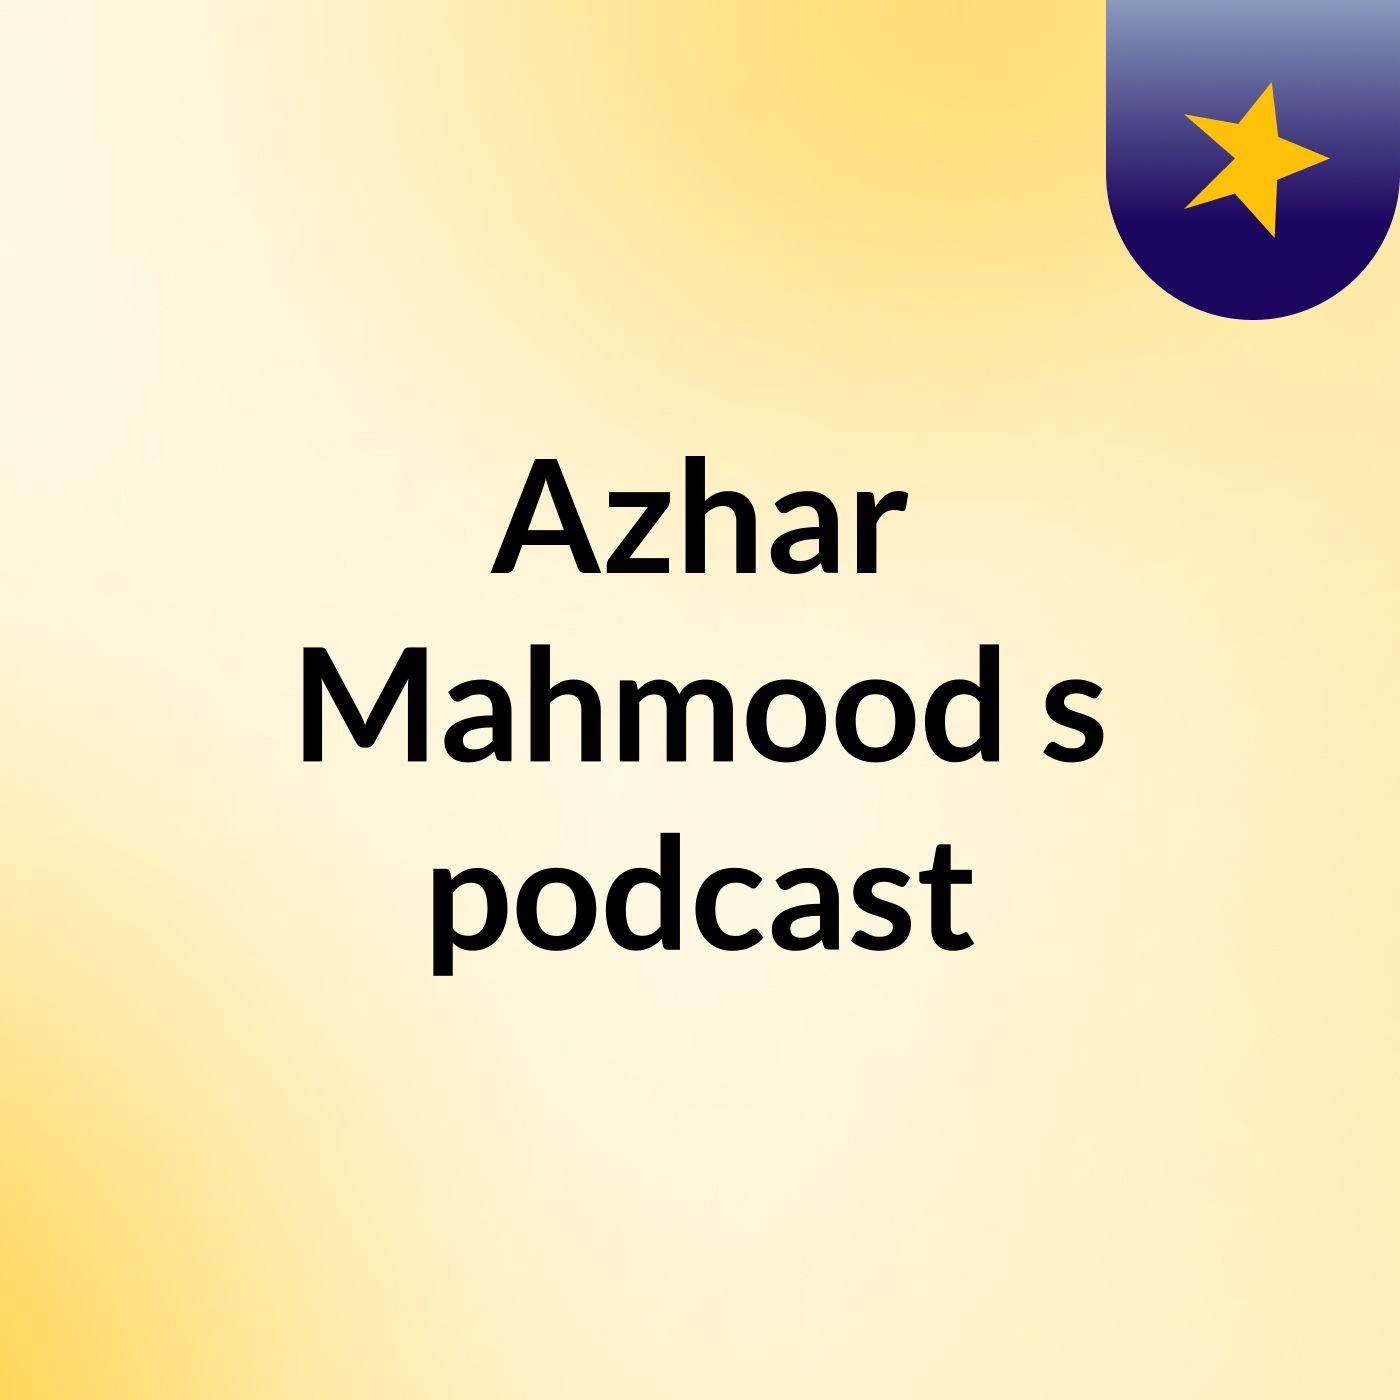 Episode 2 - Azhar Mahmood's podcast